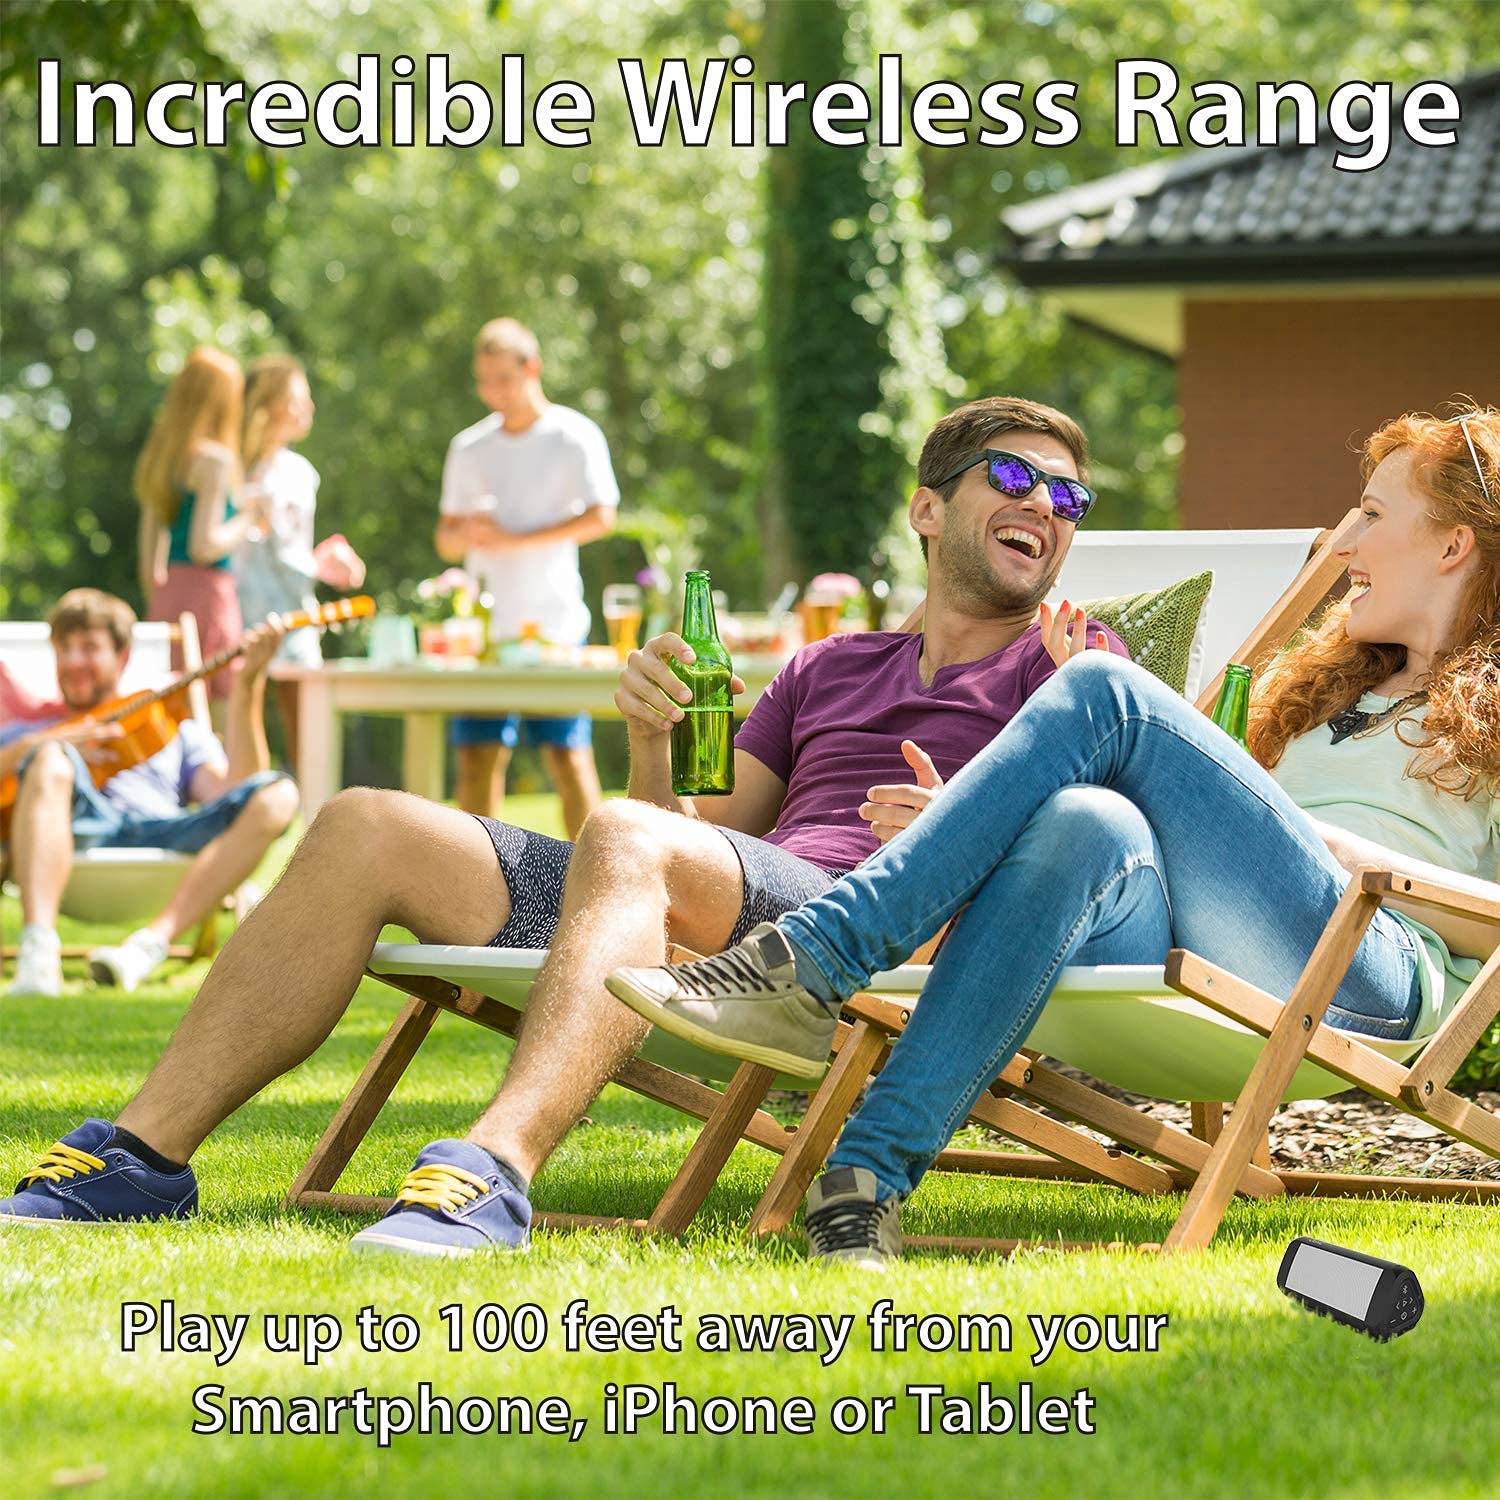 OontZ Angle 3 Ultra, 5.0 Bluetooth Speaker, White,14 Watts, Hi-Quality Sound & Bass, 100 Ft Wireless Range, IPX7 Waterproof Plus Official OontZ Bluetooth Speaker Carry Case